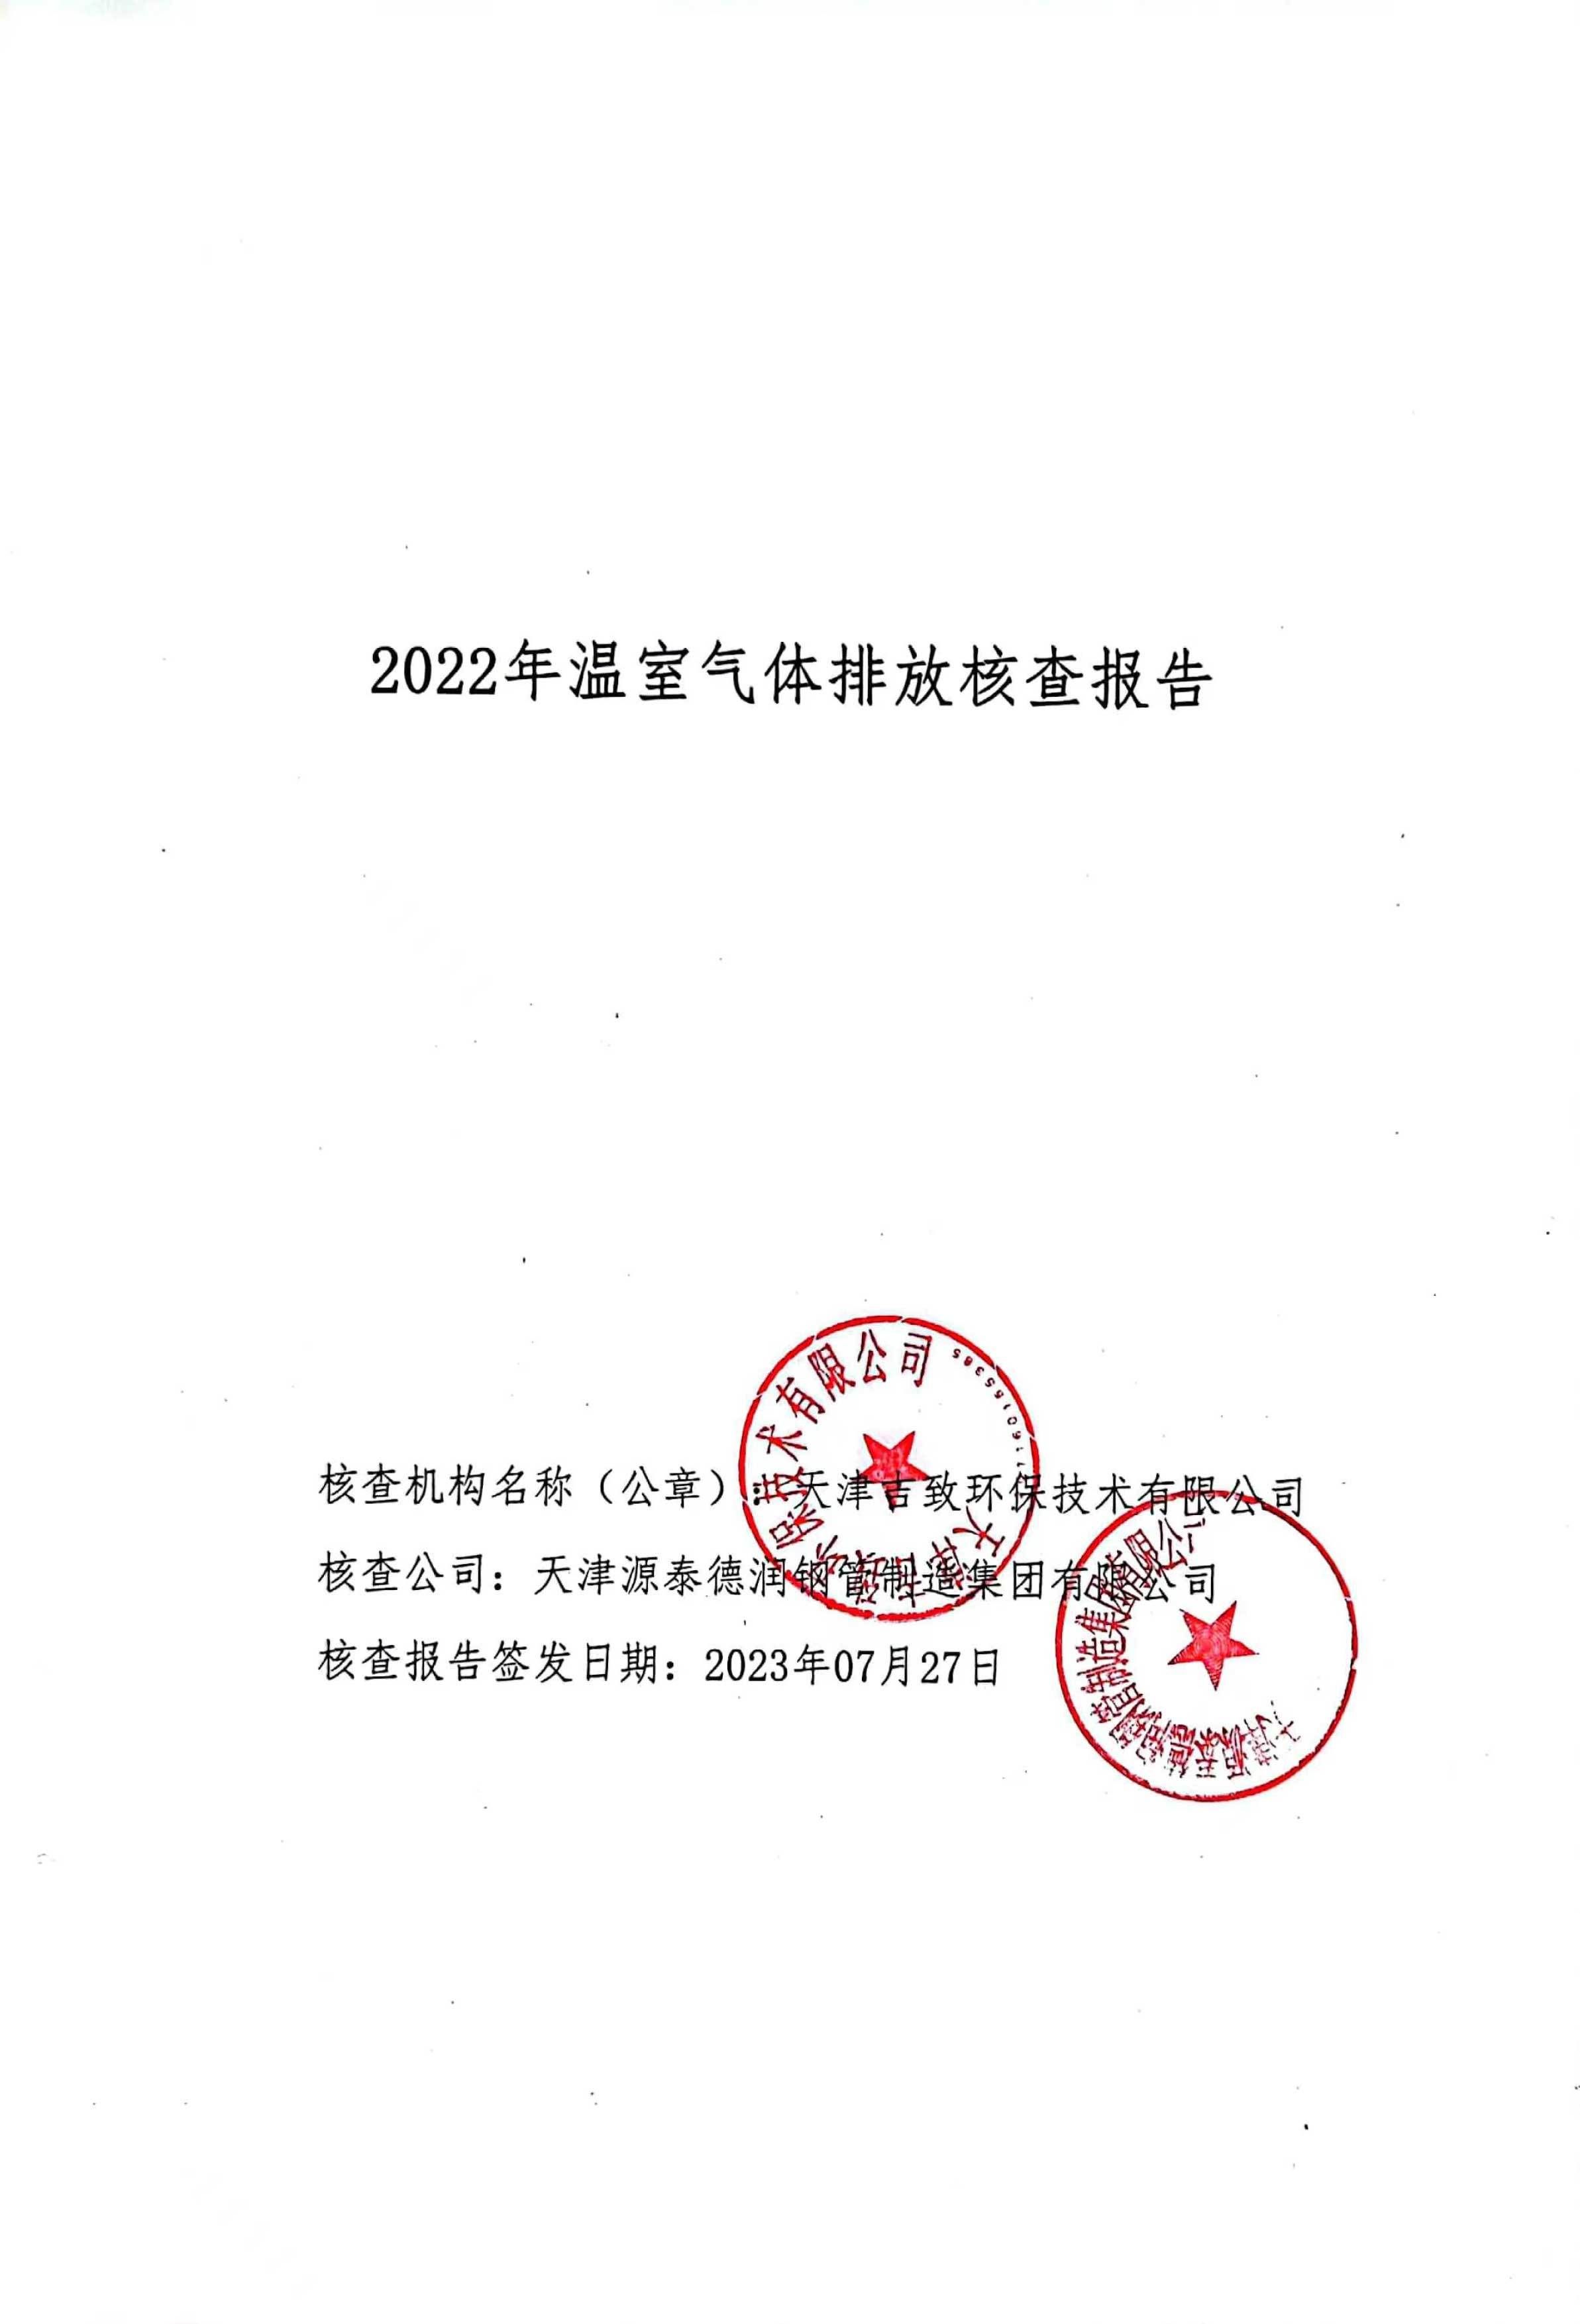 天津源泰徳潤鋼管製造グループの2022年度温室効果ガス排出審査報告書。